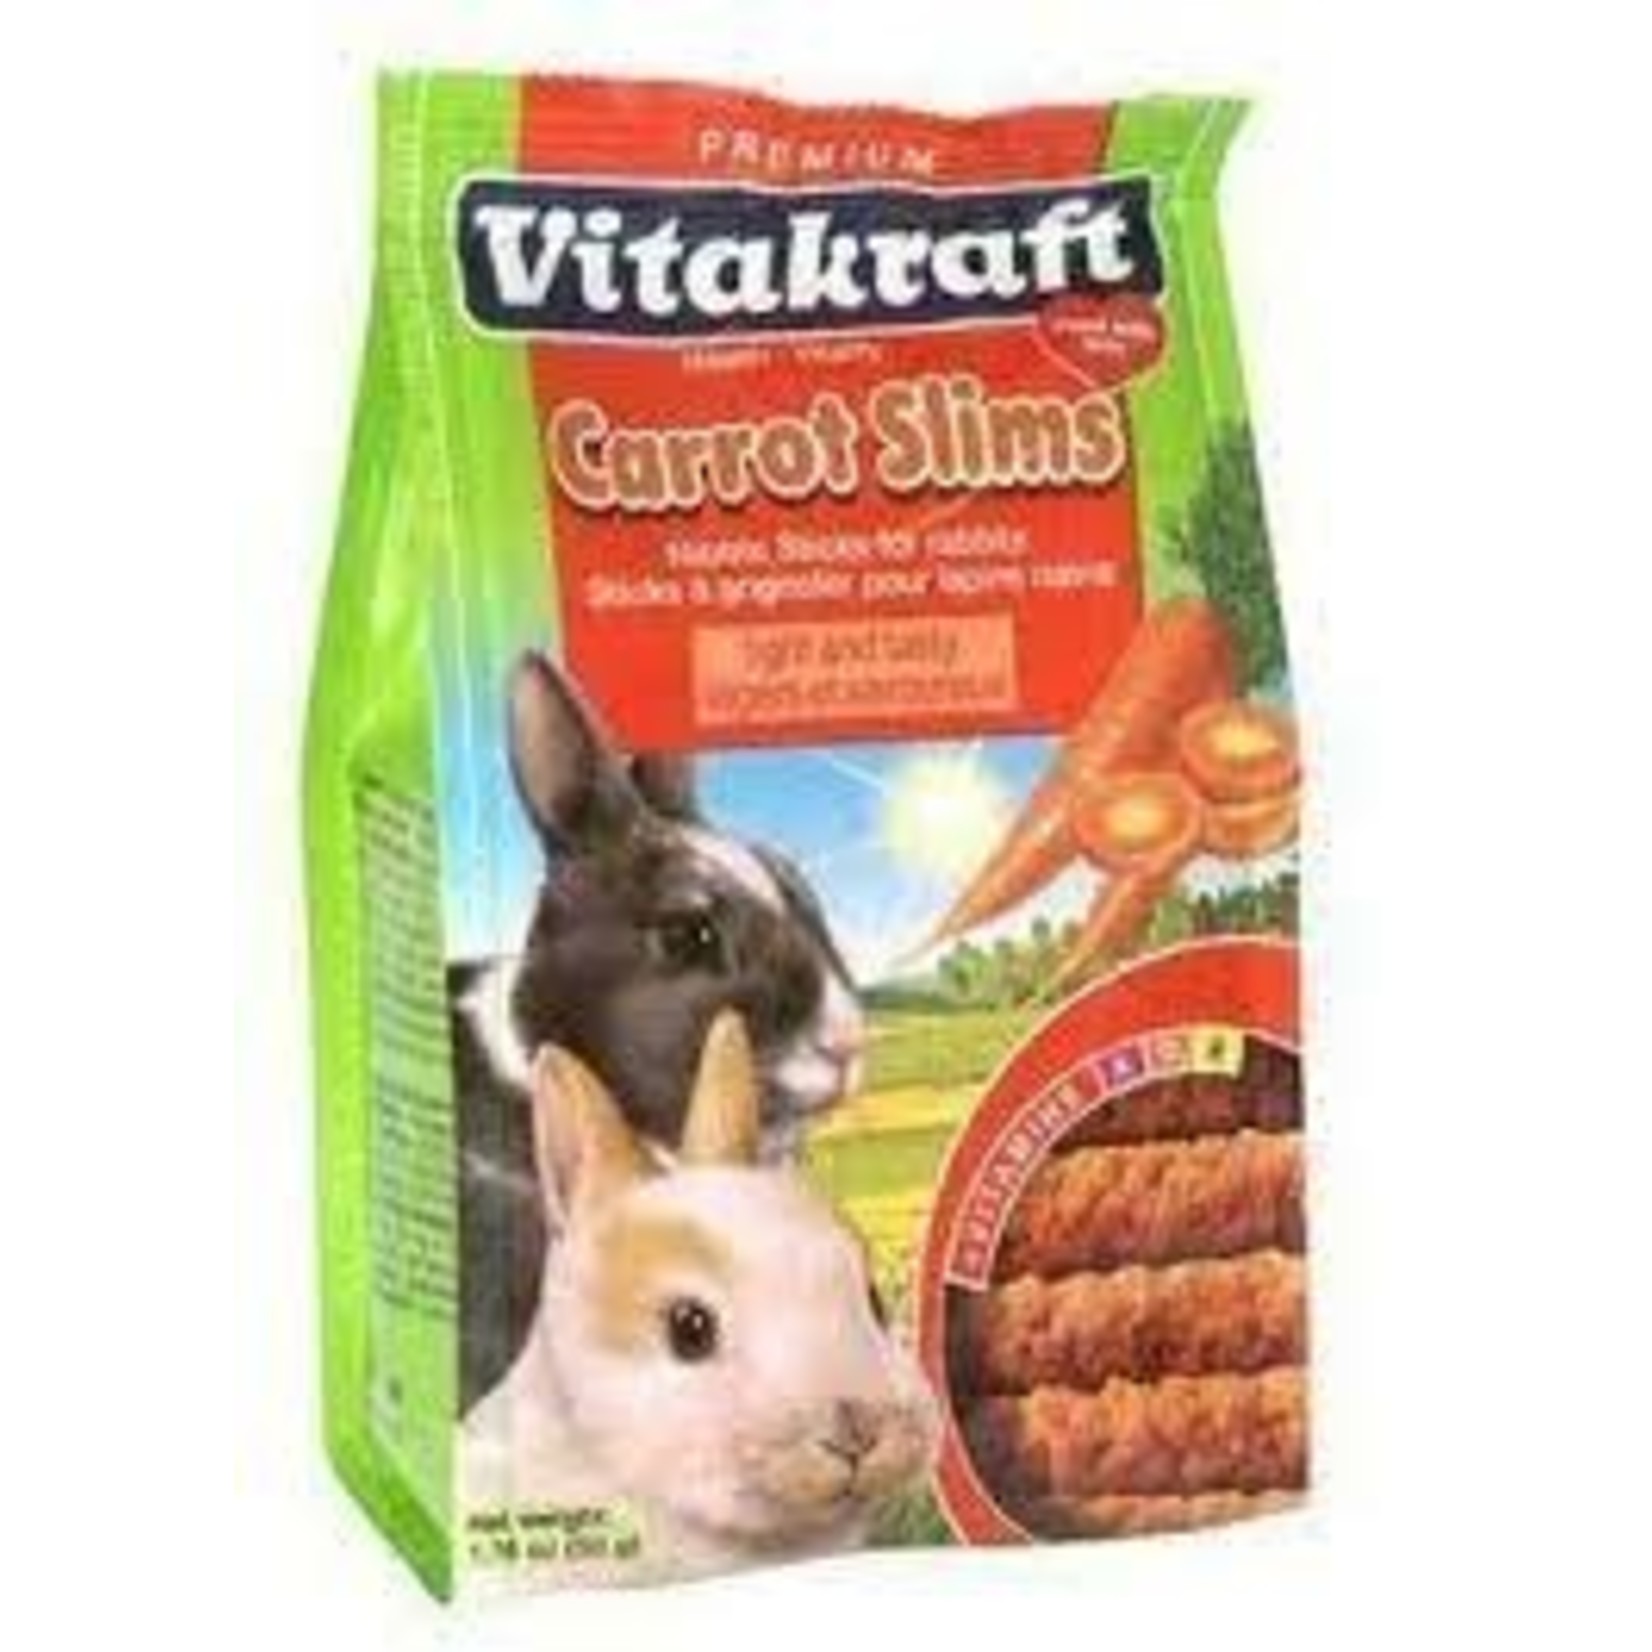 vitakraft VK Carrot Slims Rabbits